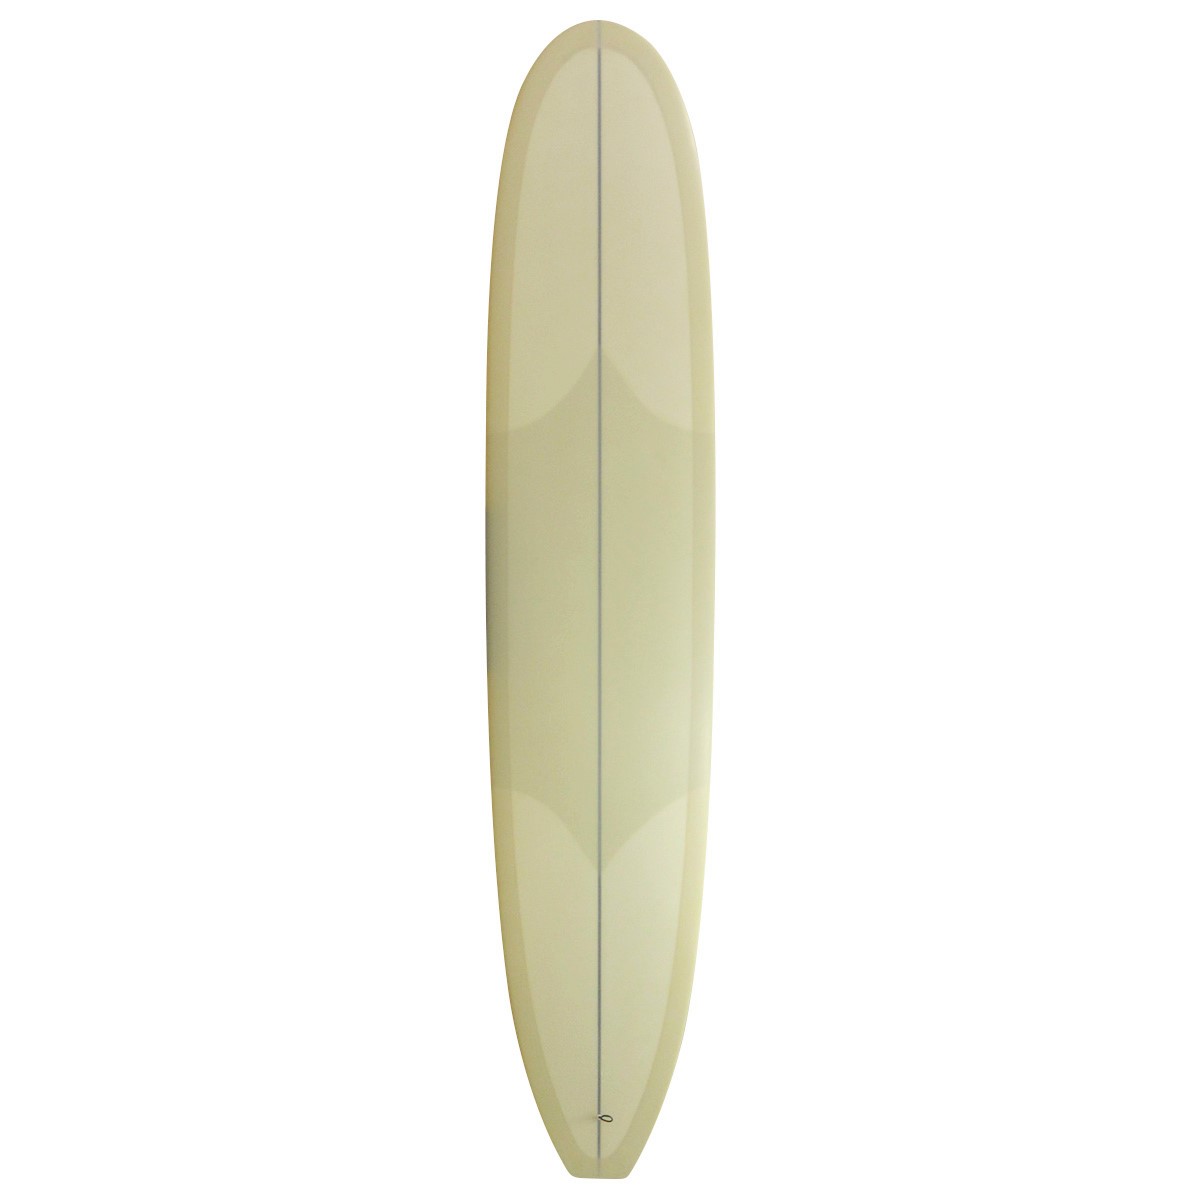 5 Stü Surf Leine Plug Surfbrett Longboard Leine Cup Plug 25mm 